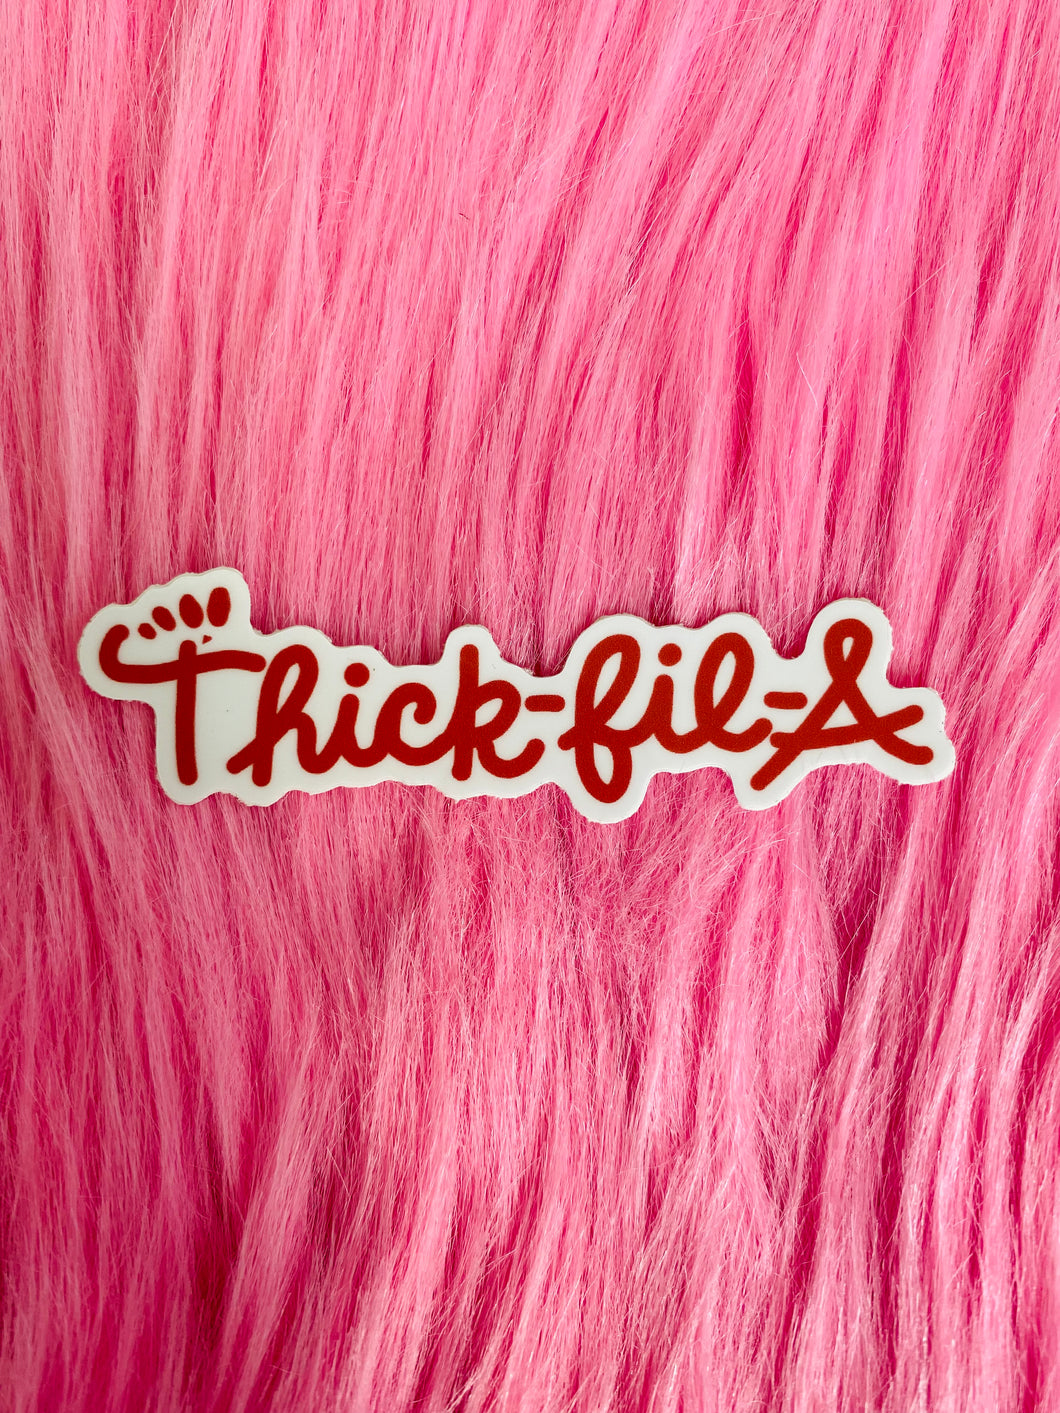 Thick-fil-a Sticker